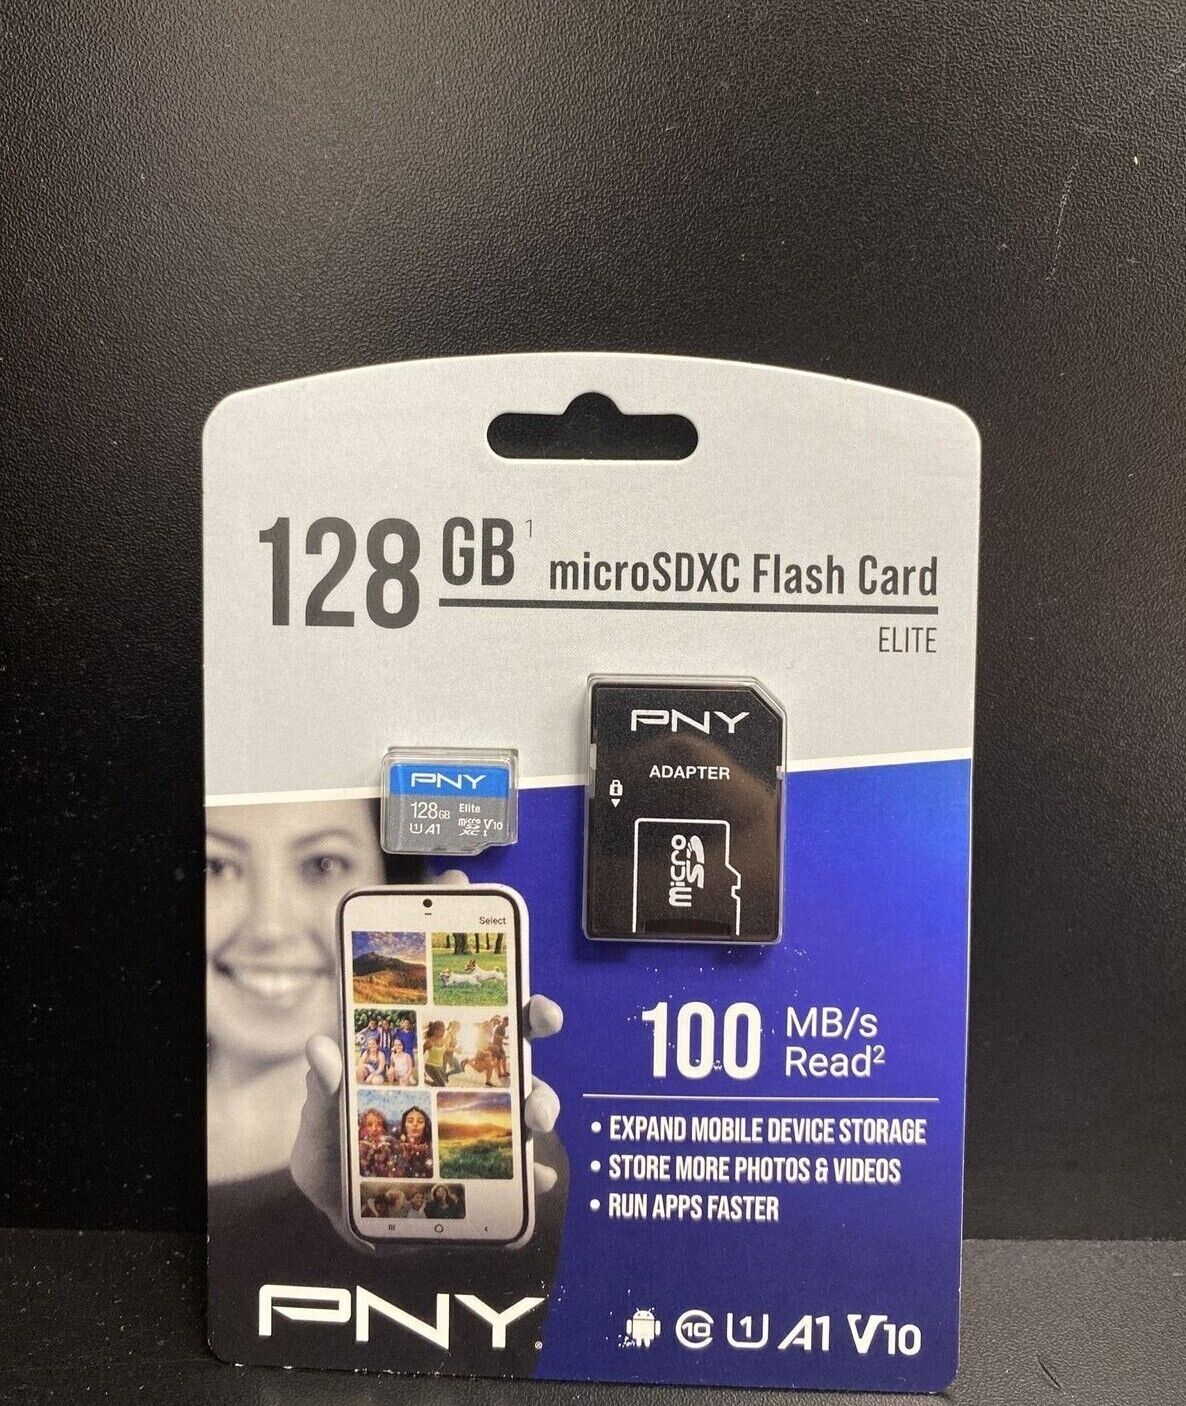 PNY 32GB microSDHC Flash Card ELITE 100 MB/s Reas2 Mobile Device Storage